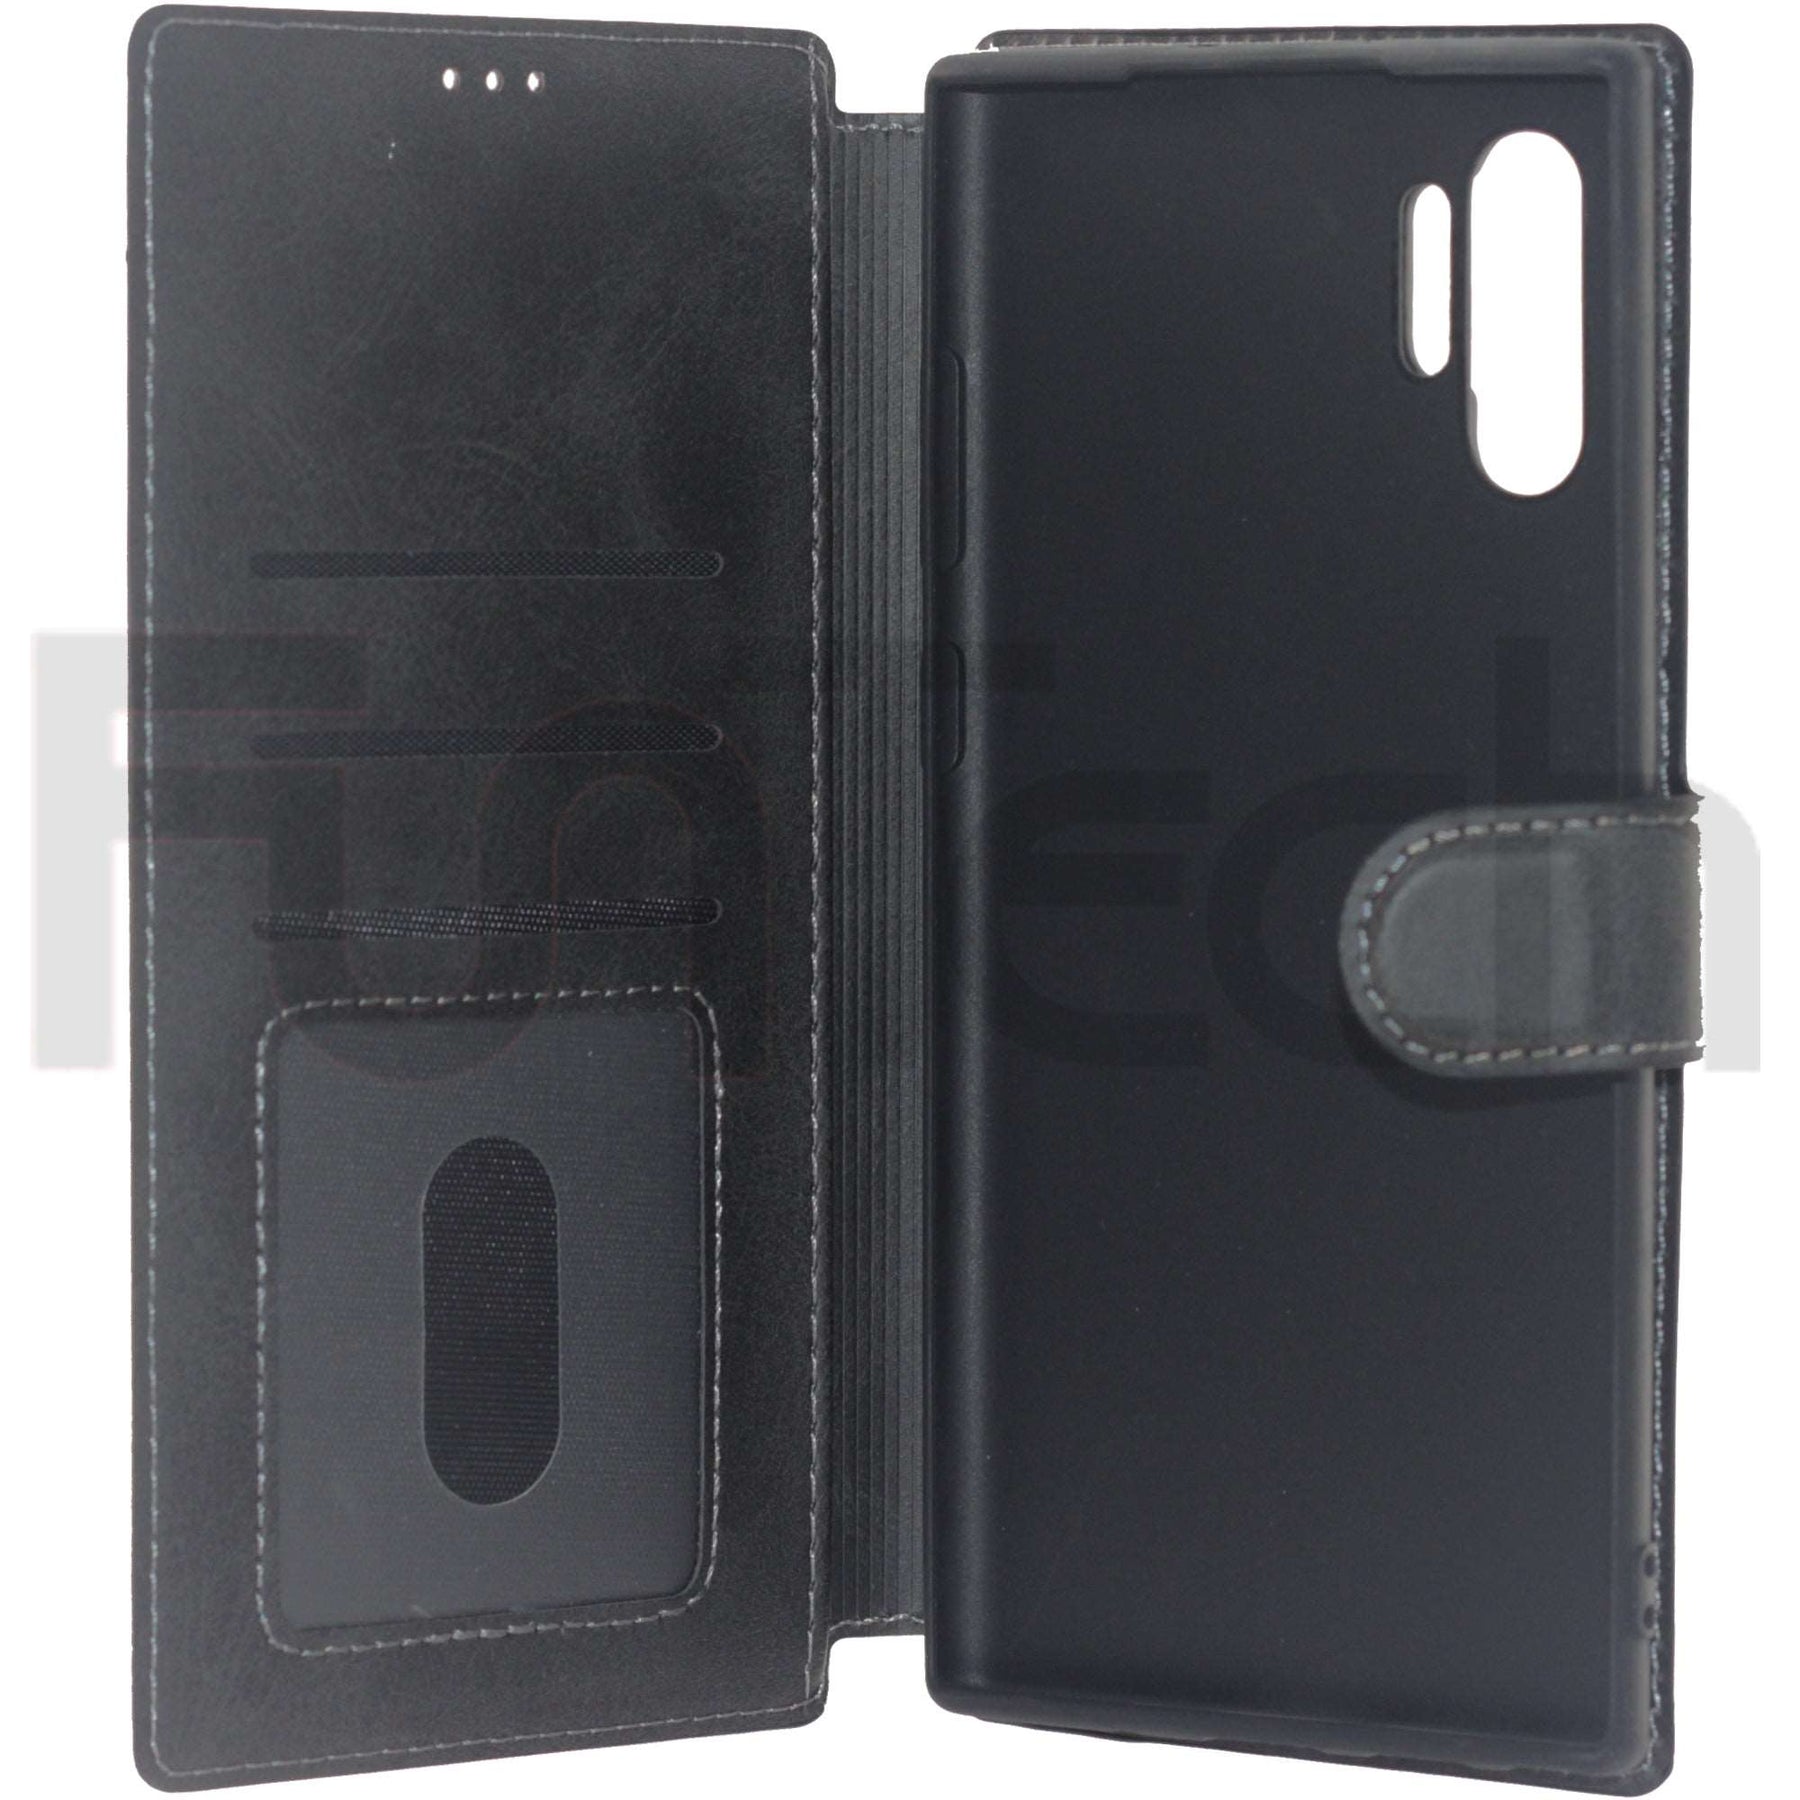 Samsung Note 10 Plus, Leather Wallet Case, Color Black.